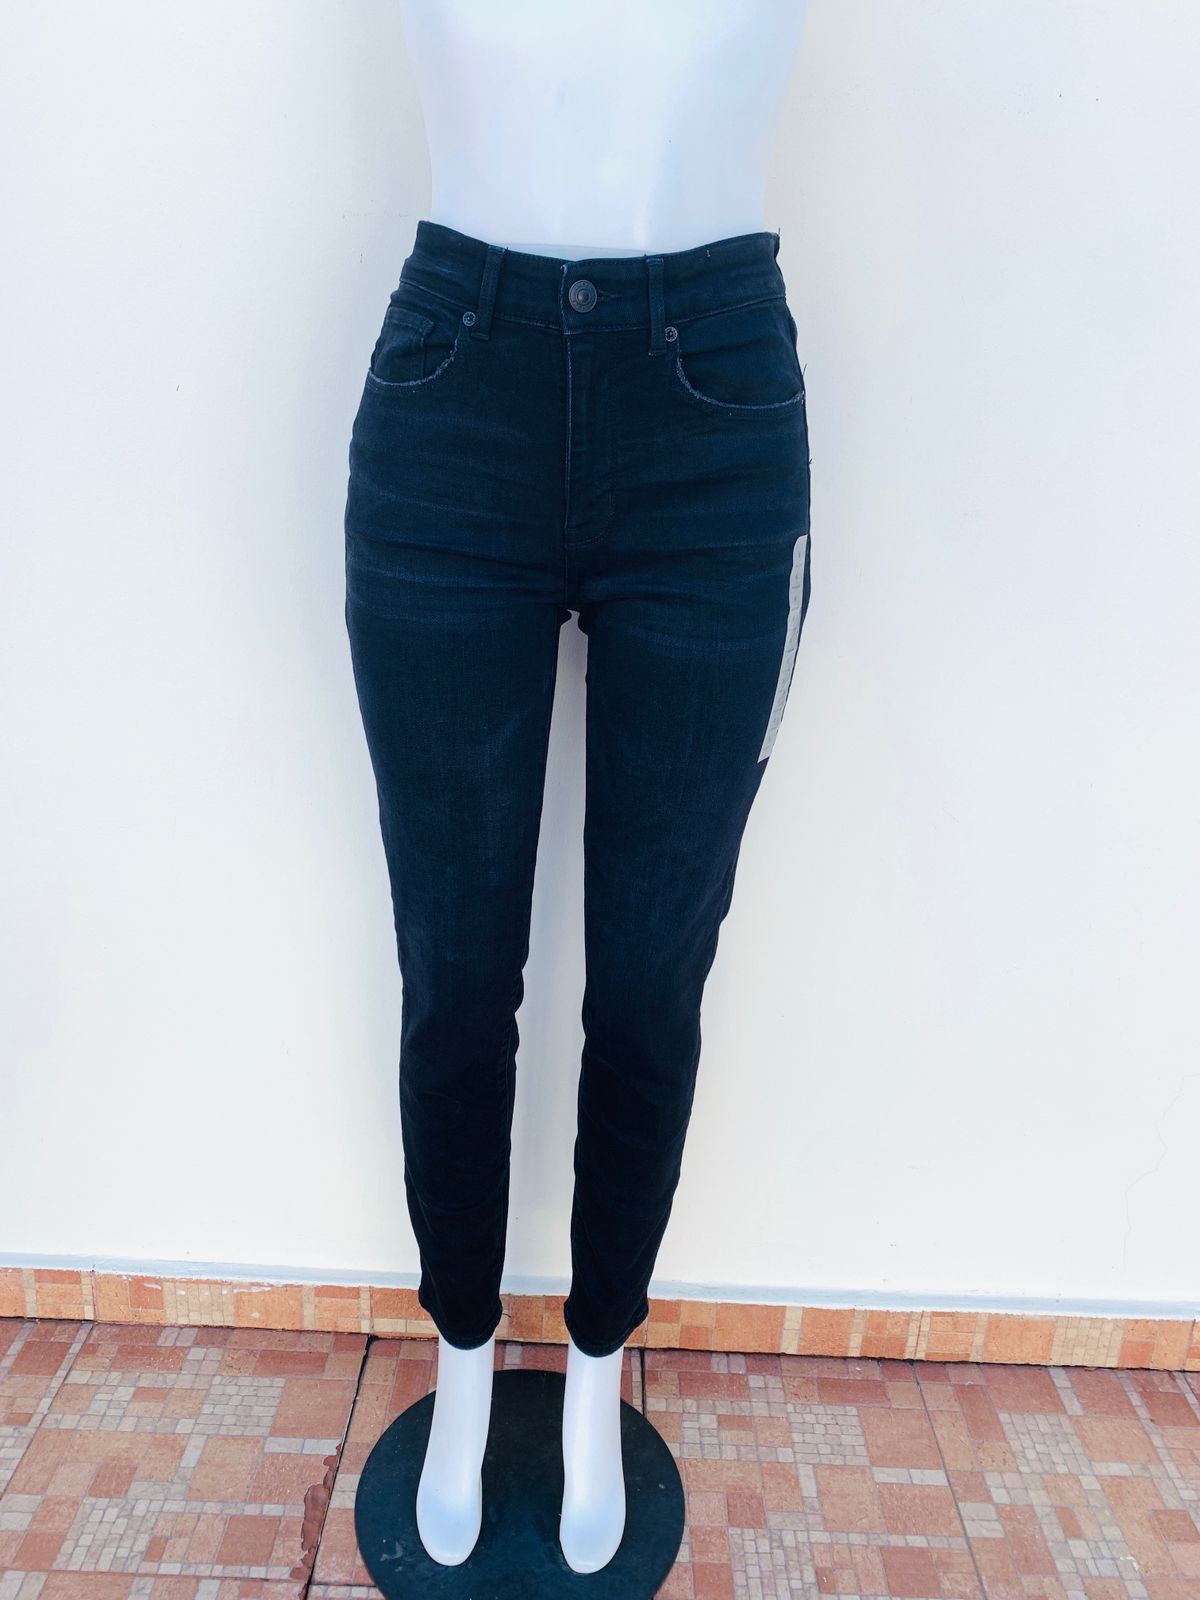 Pantalon jeans American Eagle original de color negro liso NEXT LEVEL STRETCH REGULAR HIGH RISE SKINNY